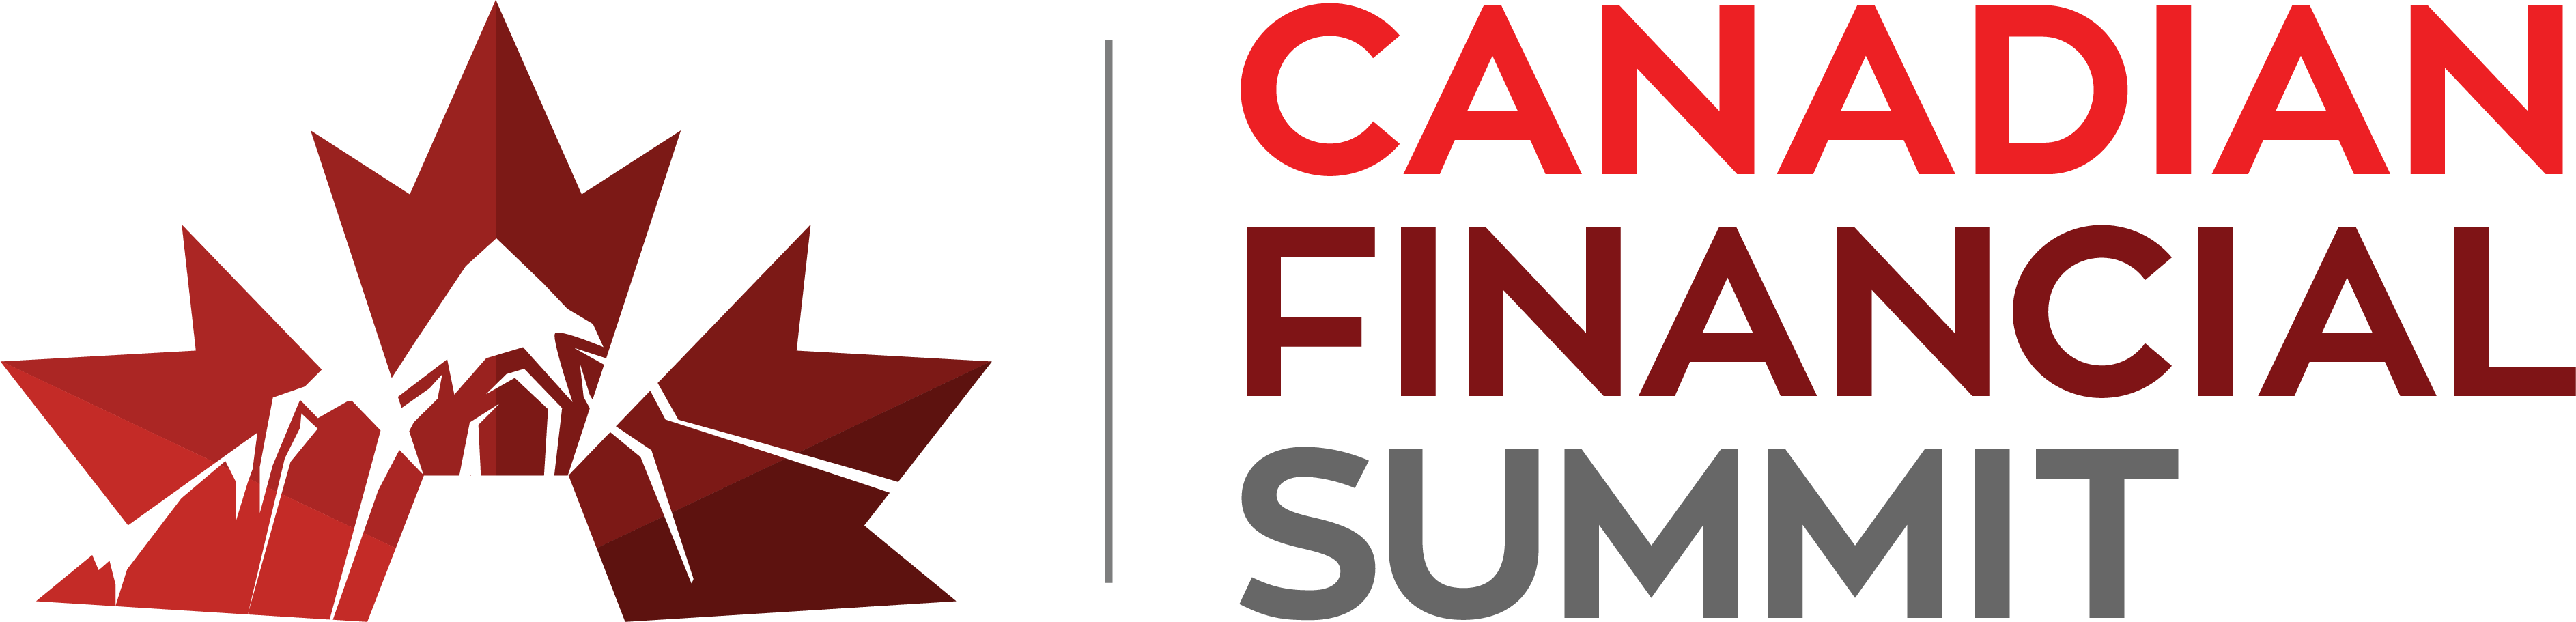 Canadian Financial Summit